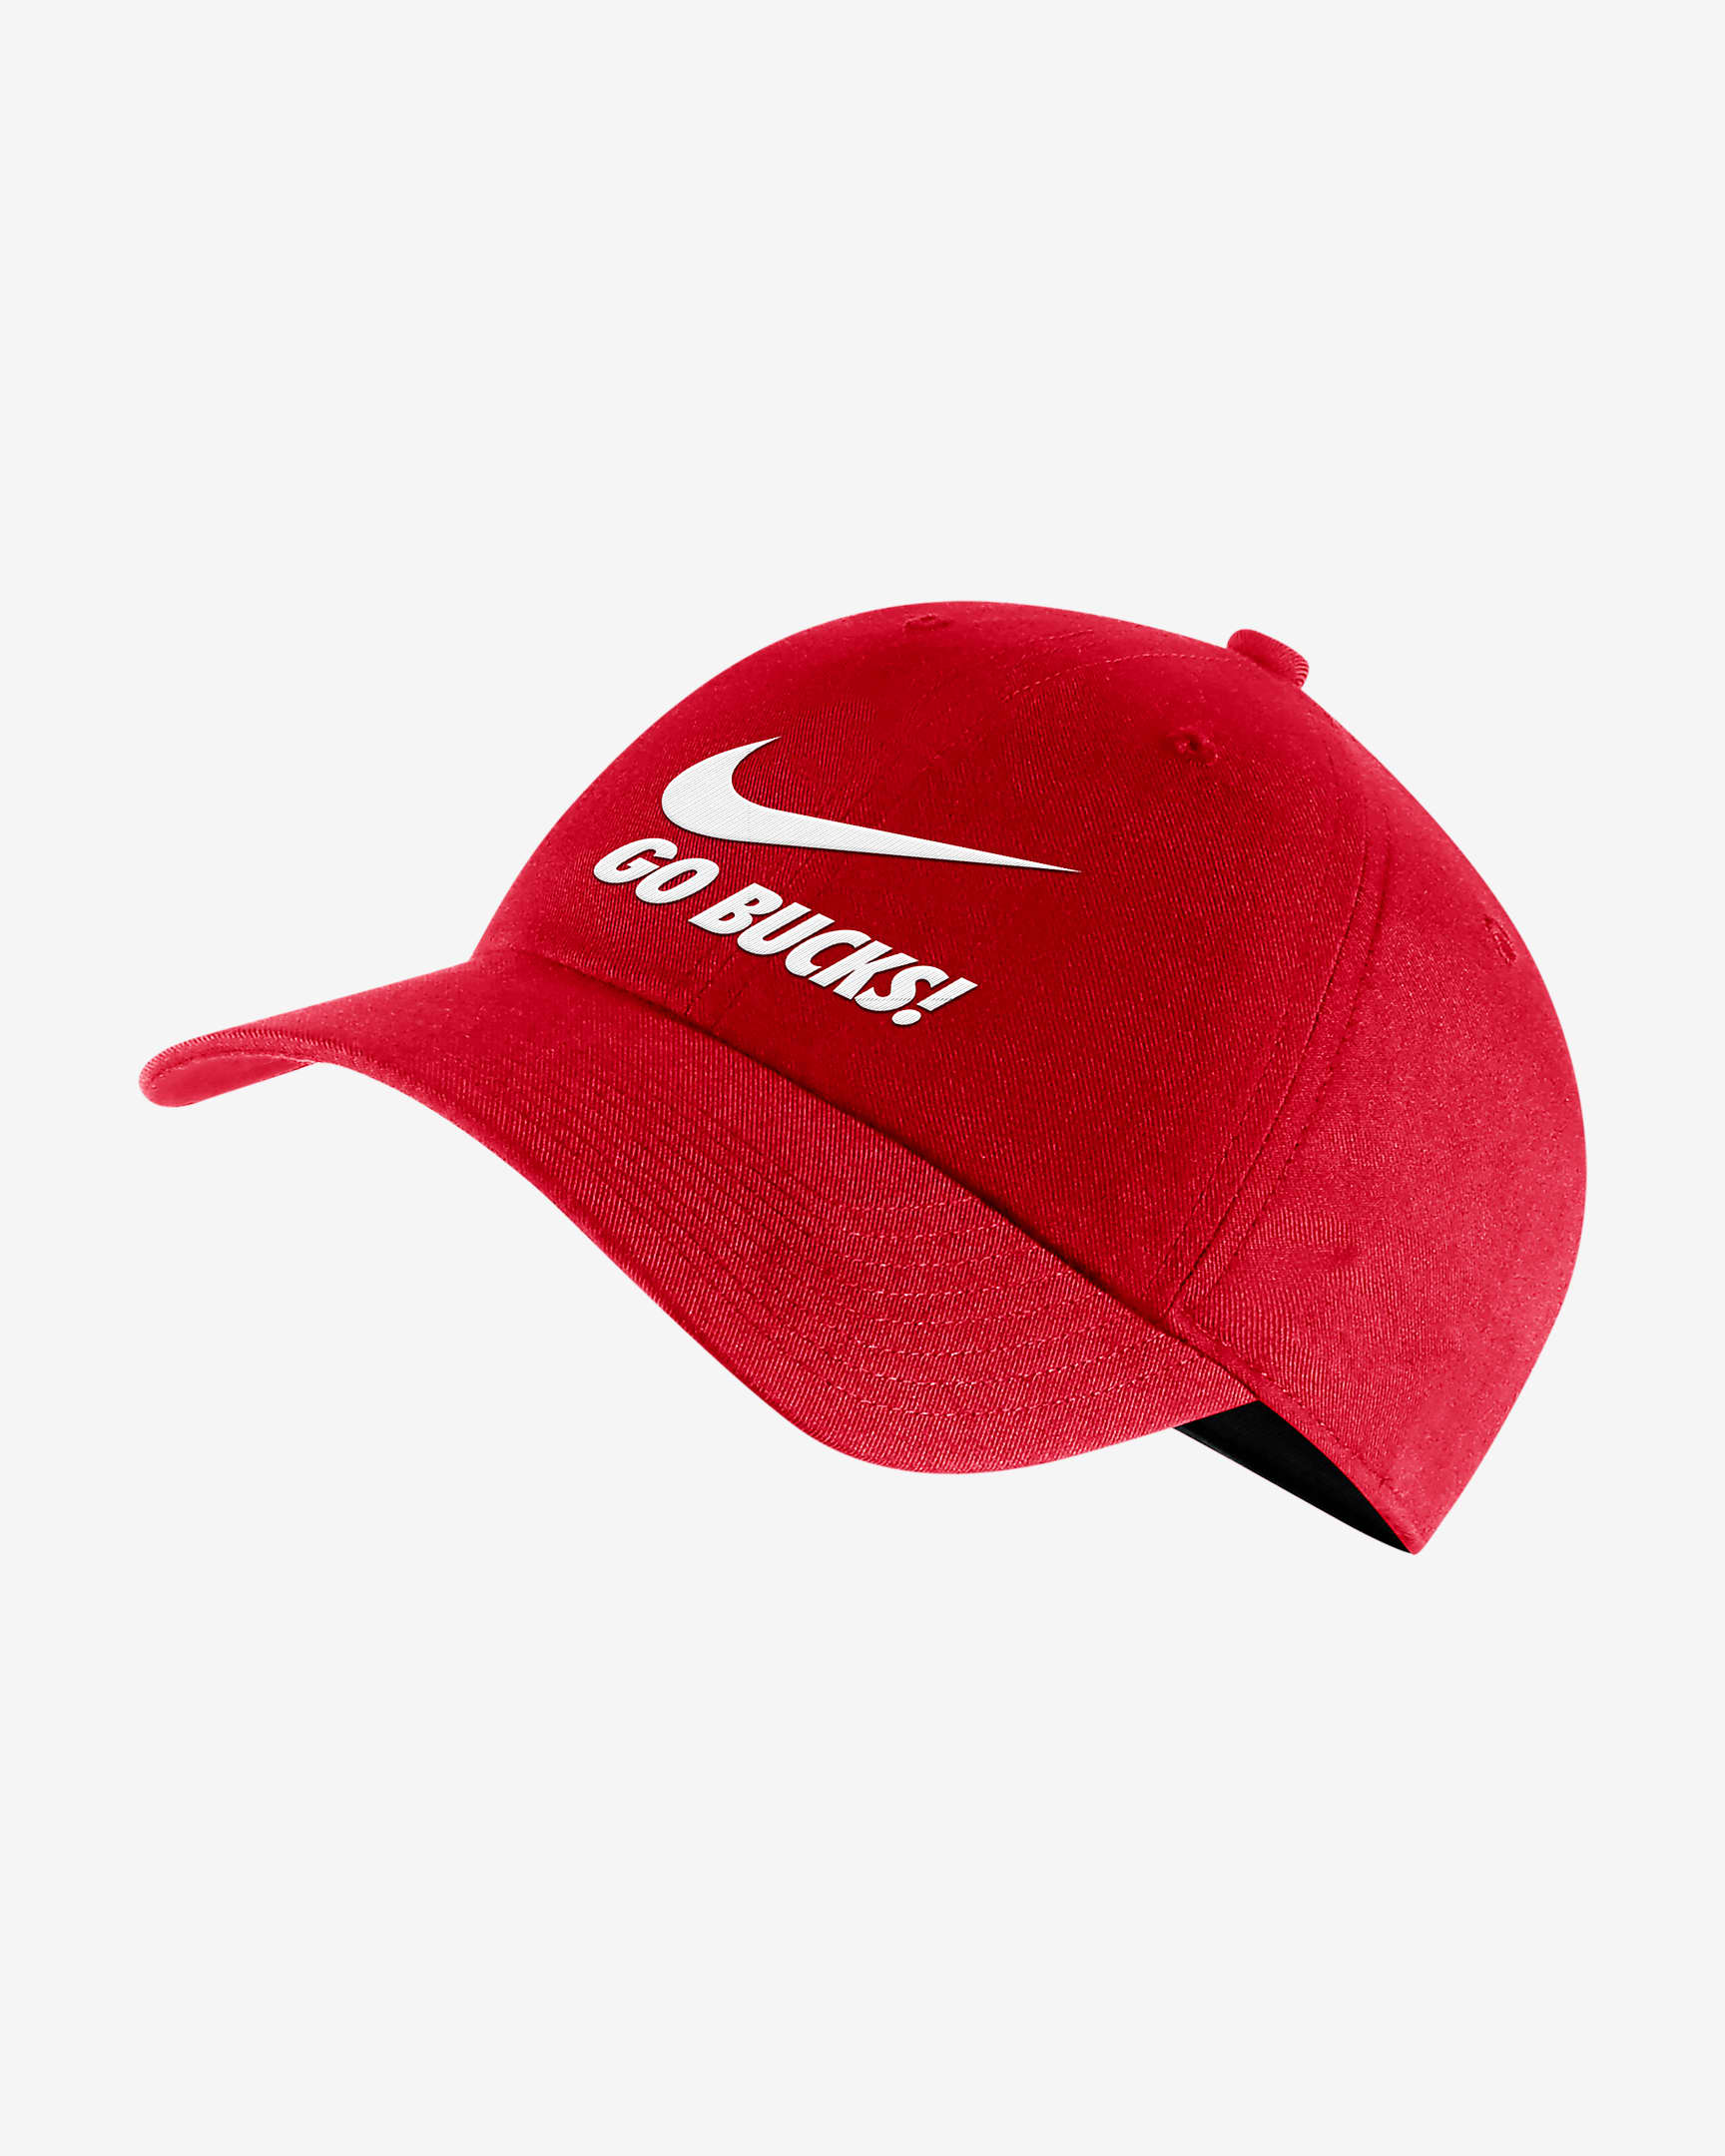 Nike College Swoosh (Ohio State) Adjustable Hat.